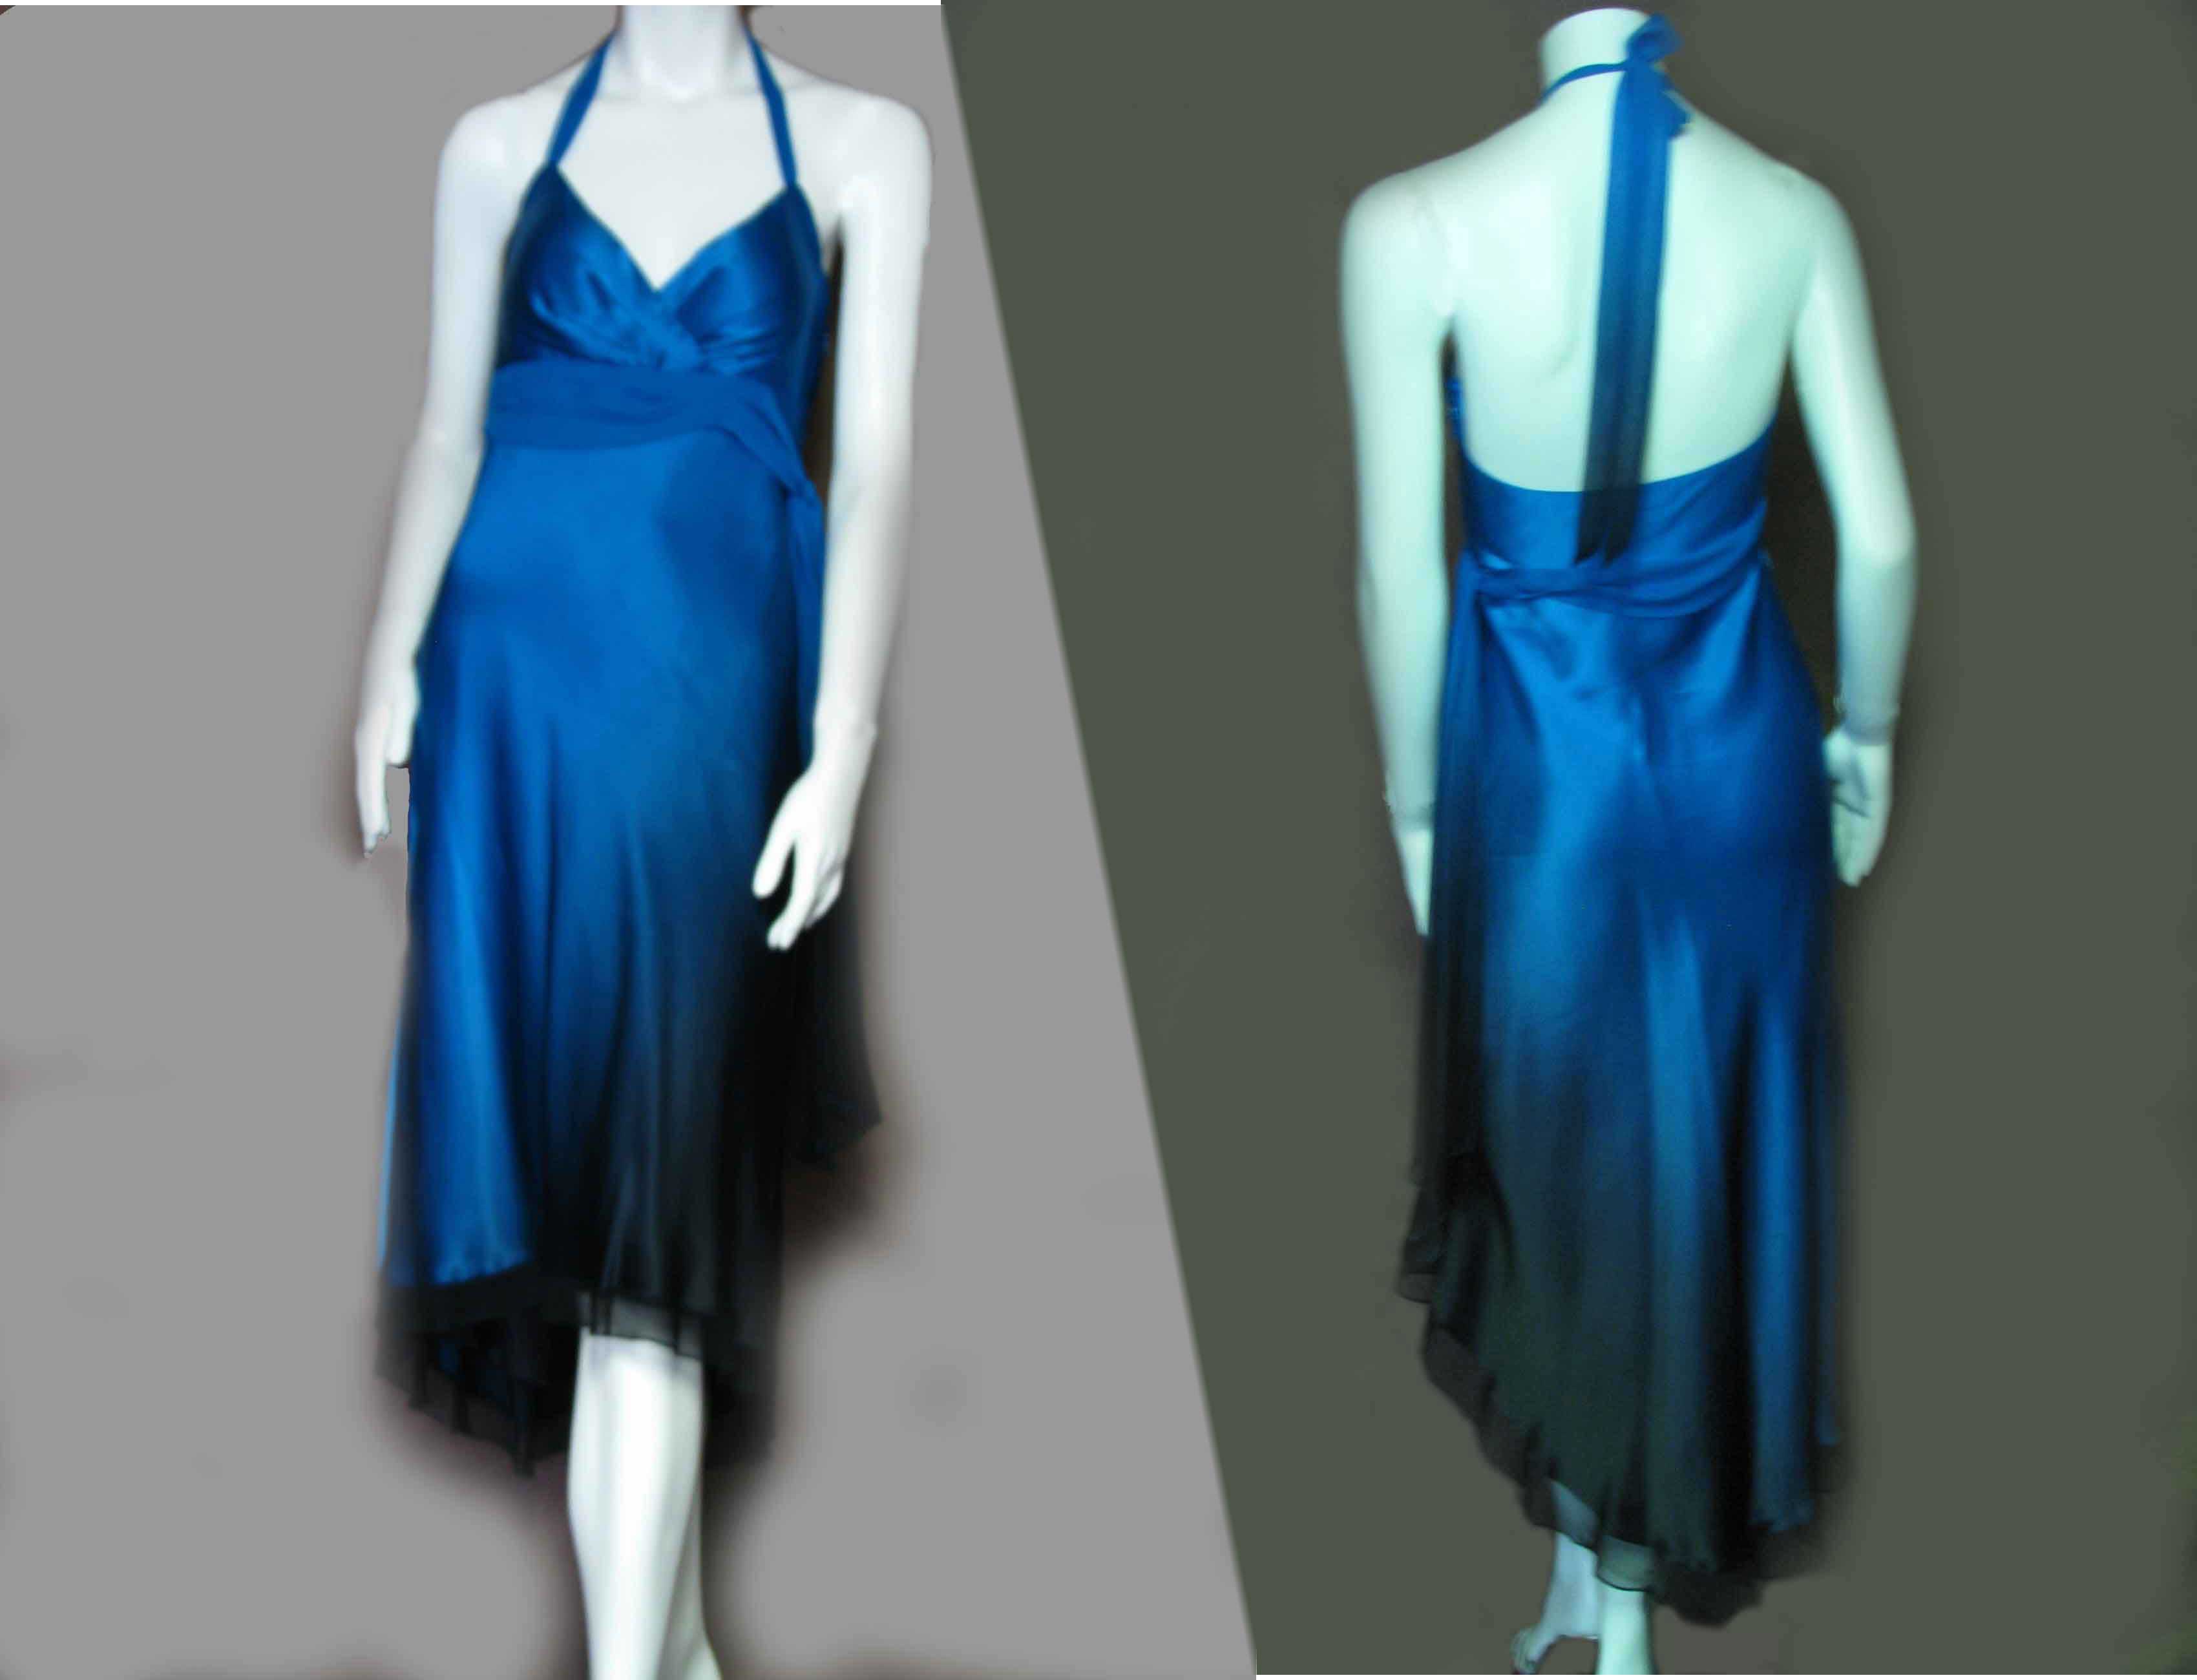 gowns.dress.340-6377bf2.jpg Teal blue halter top.